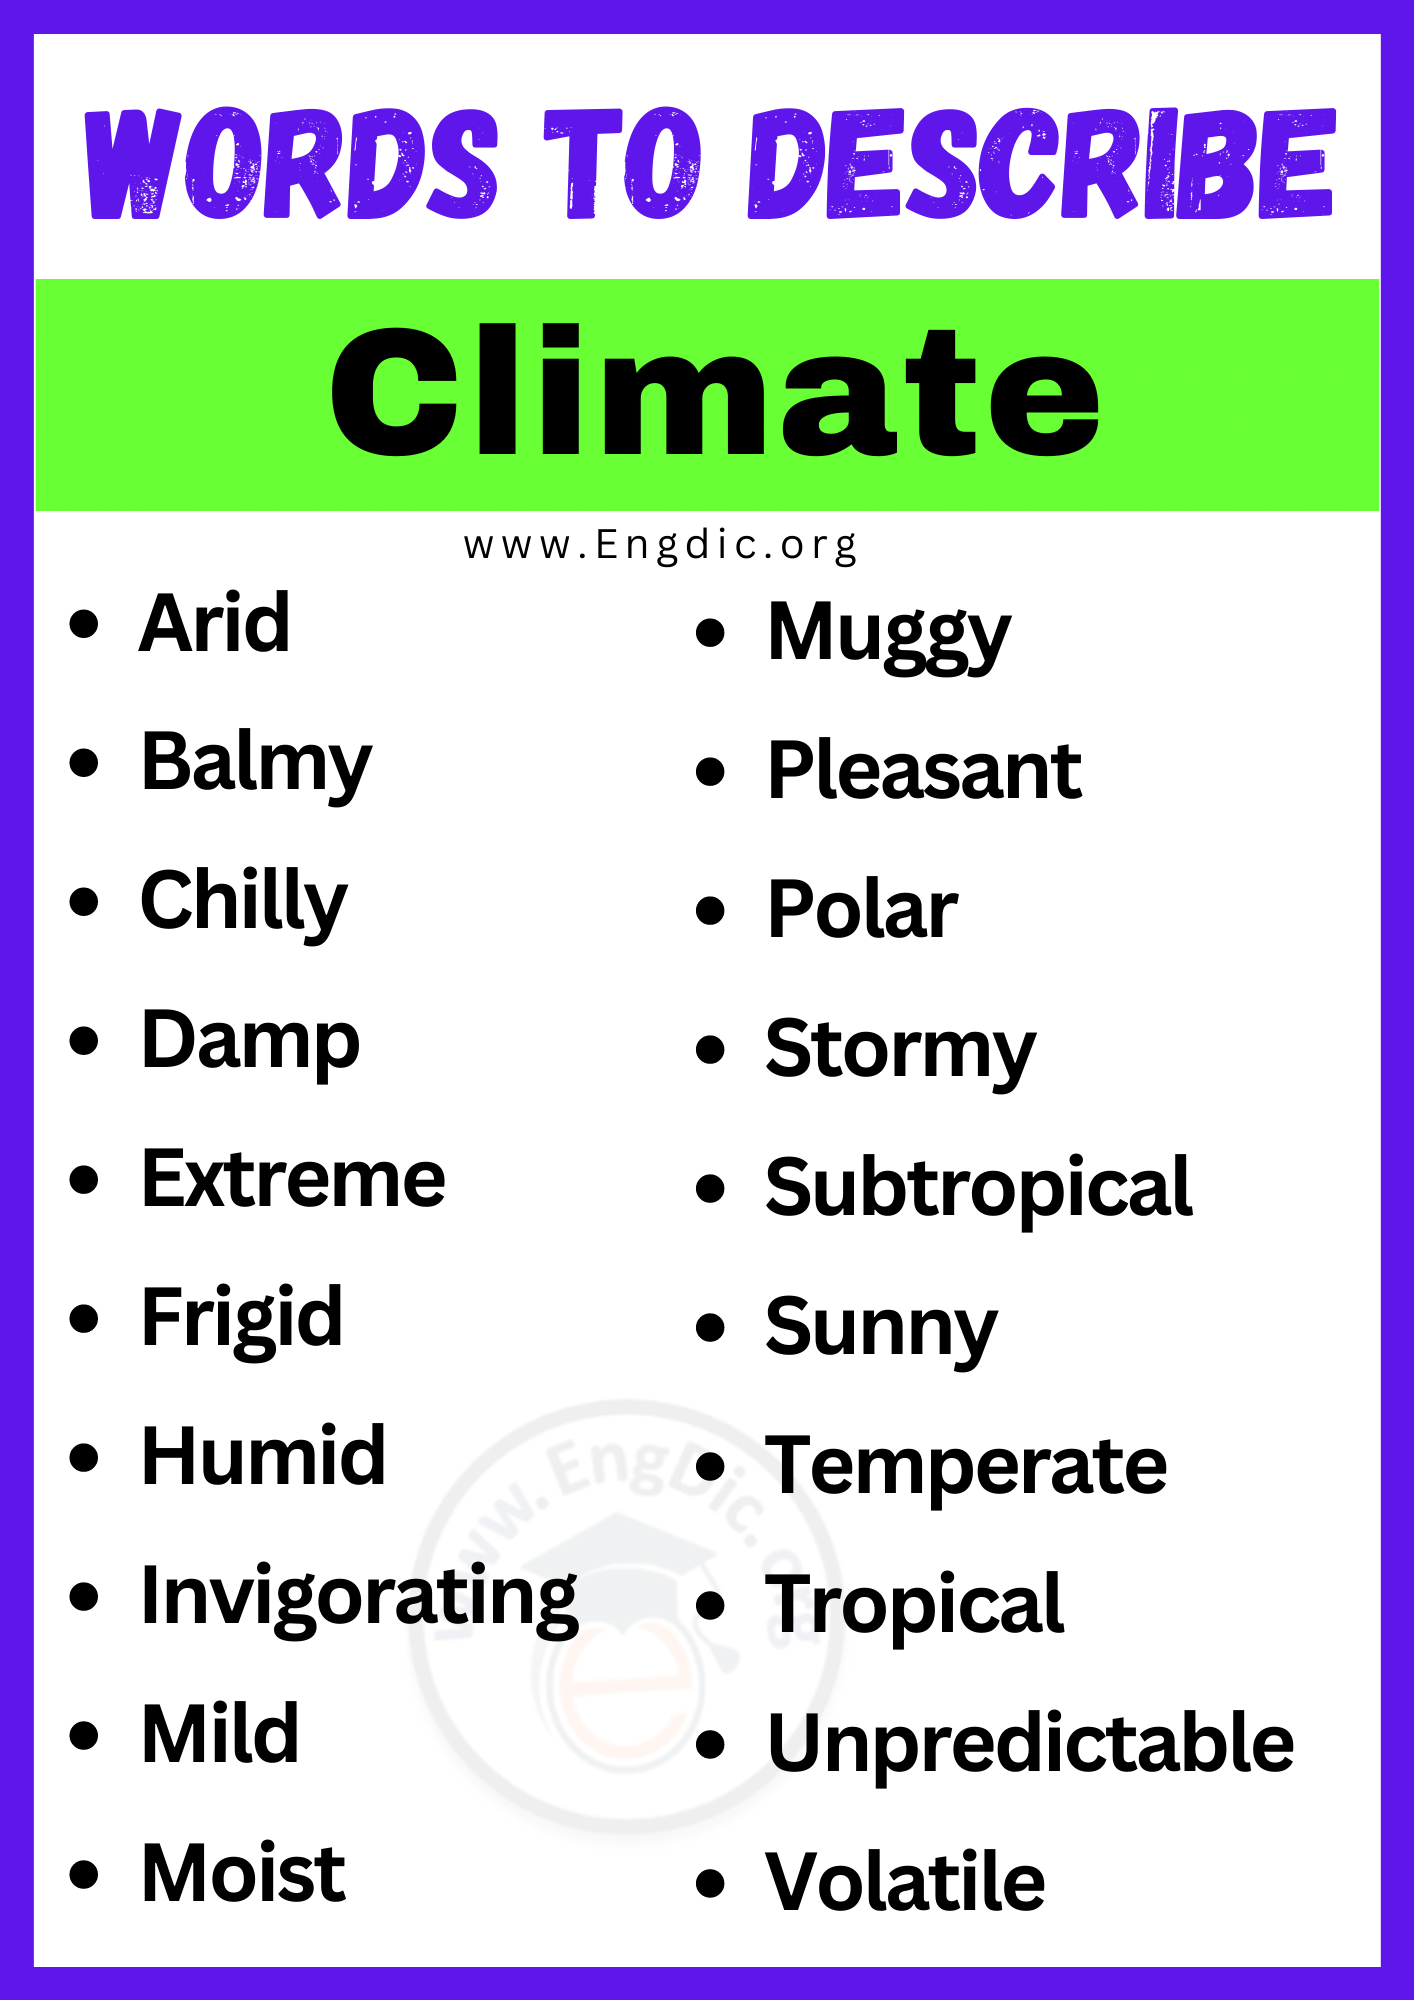 Words to Describe Climate